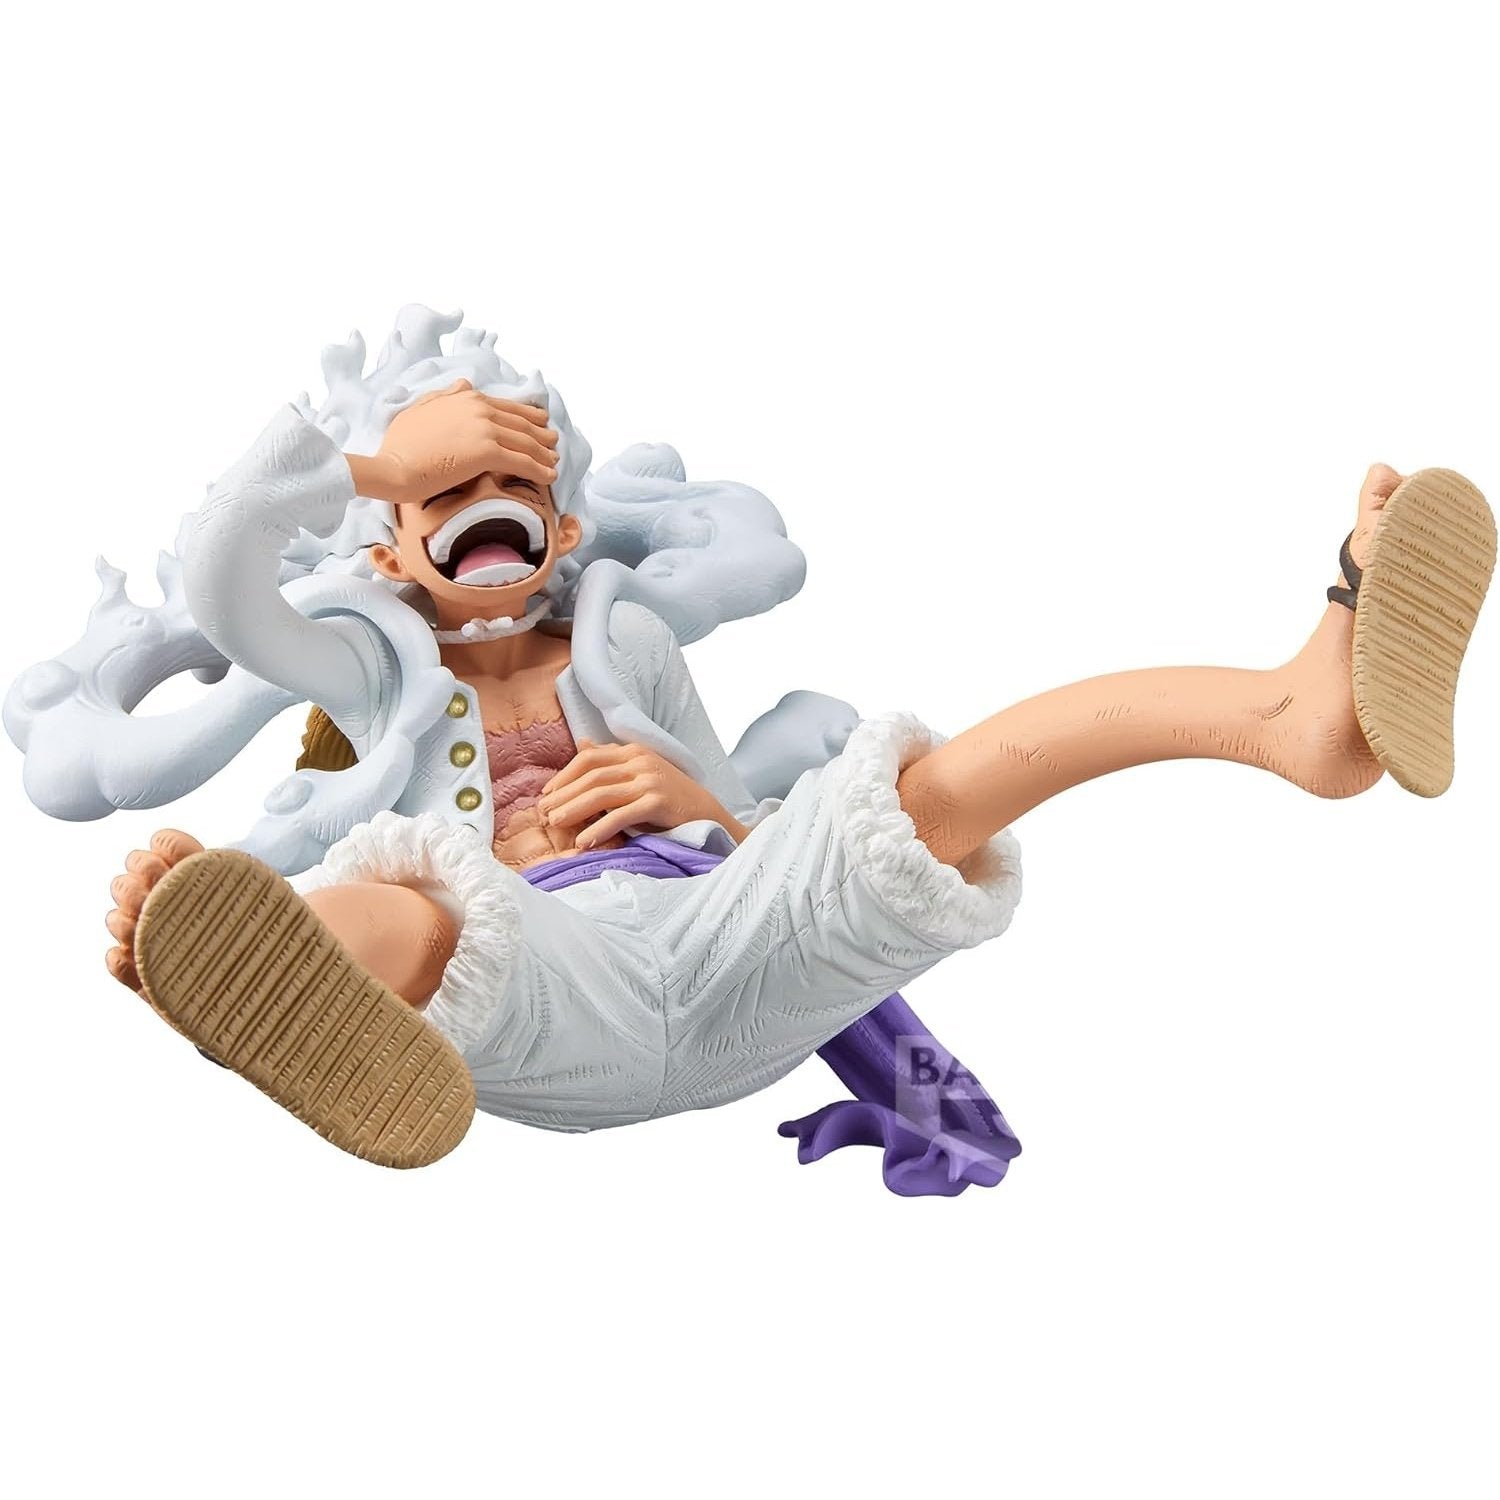 Shop One Piece Action Figures, Shirts, Pops & More | Fundom.com